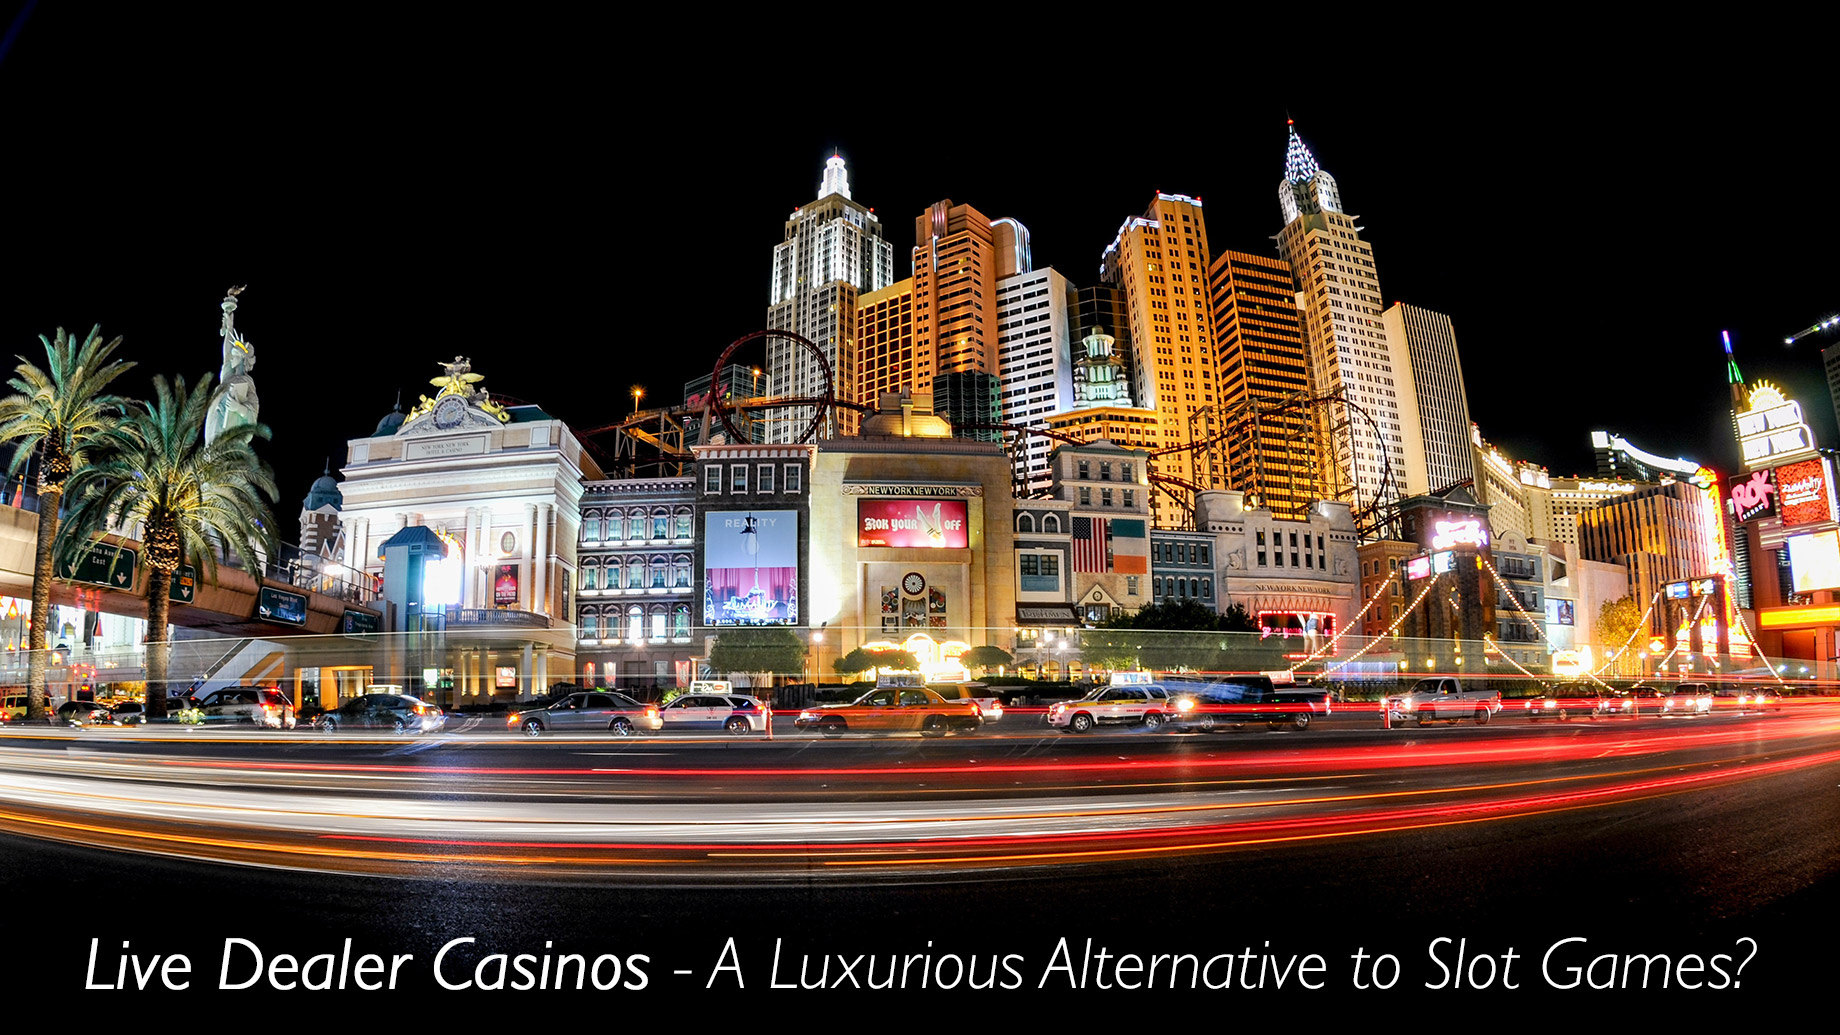 Live Dealer Casinos - A Luxurious Alternative to Slot Games?